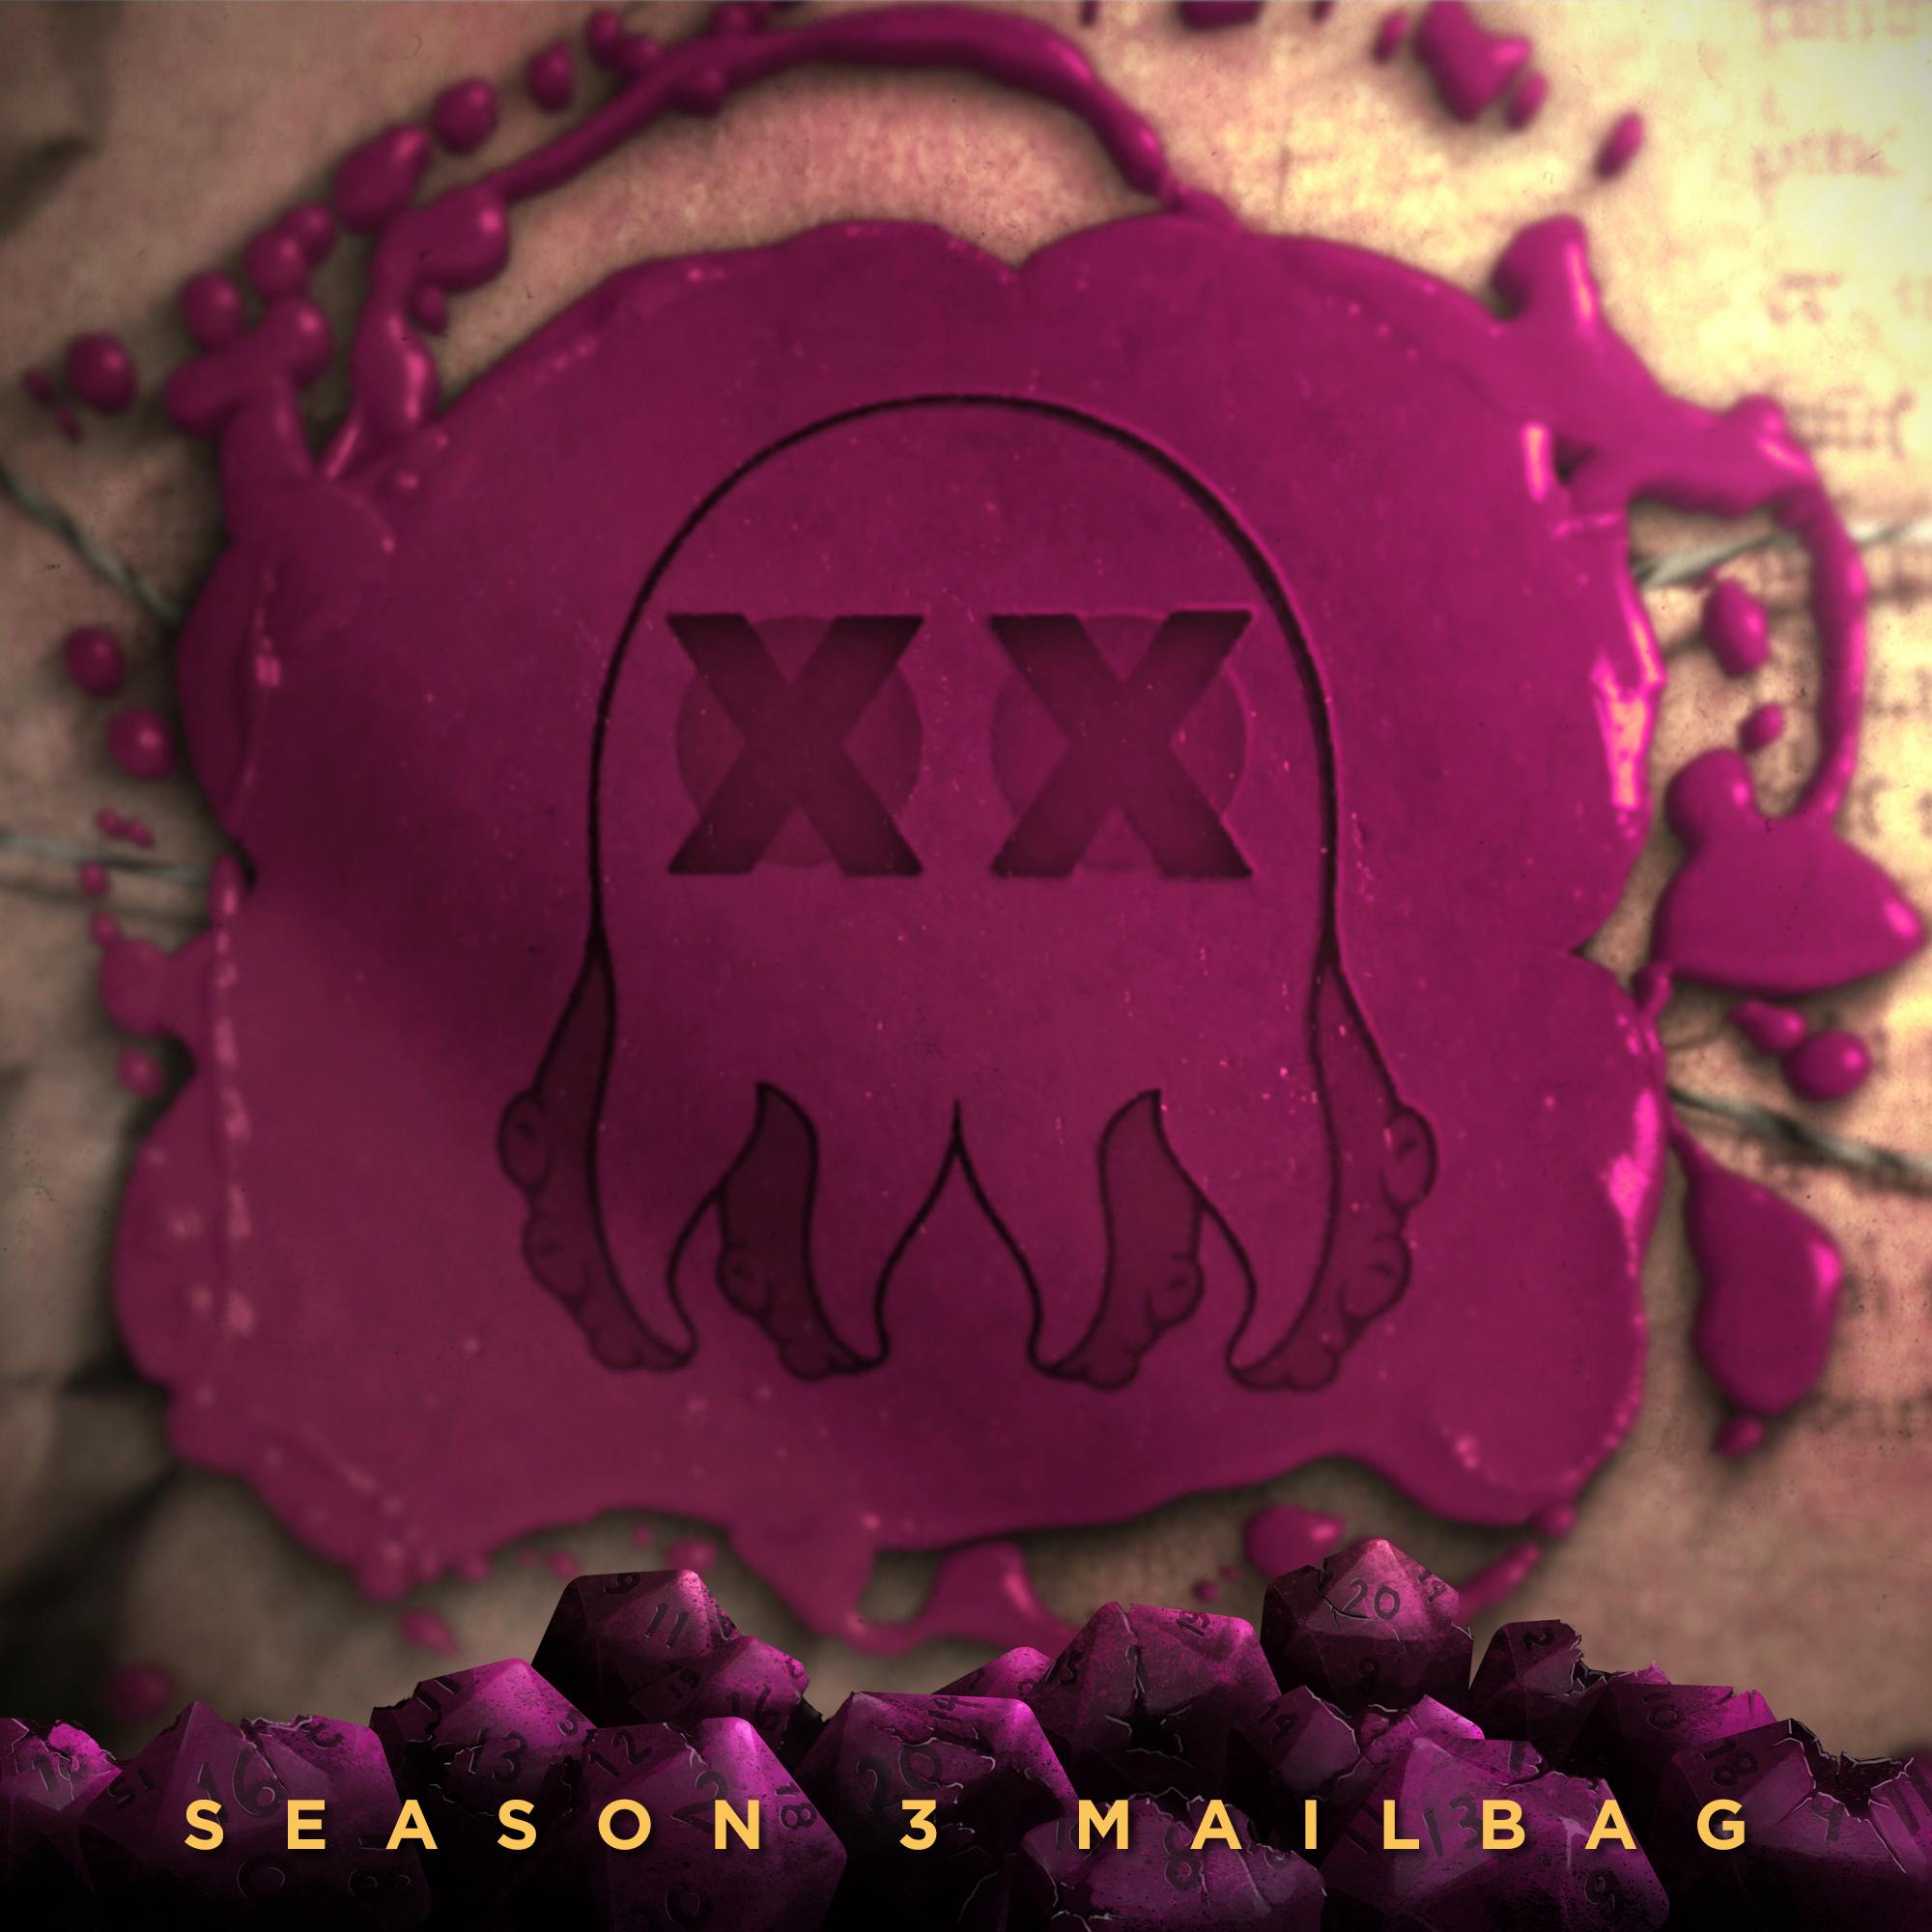 Season 3 Mailbag